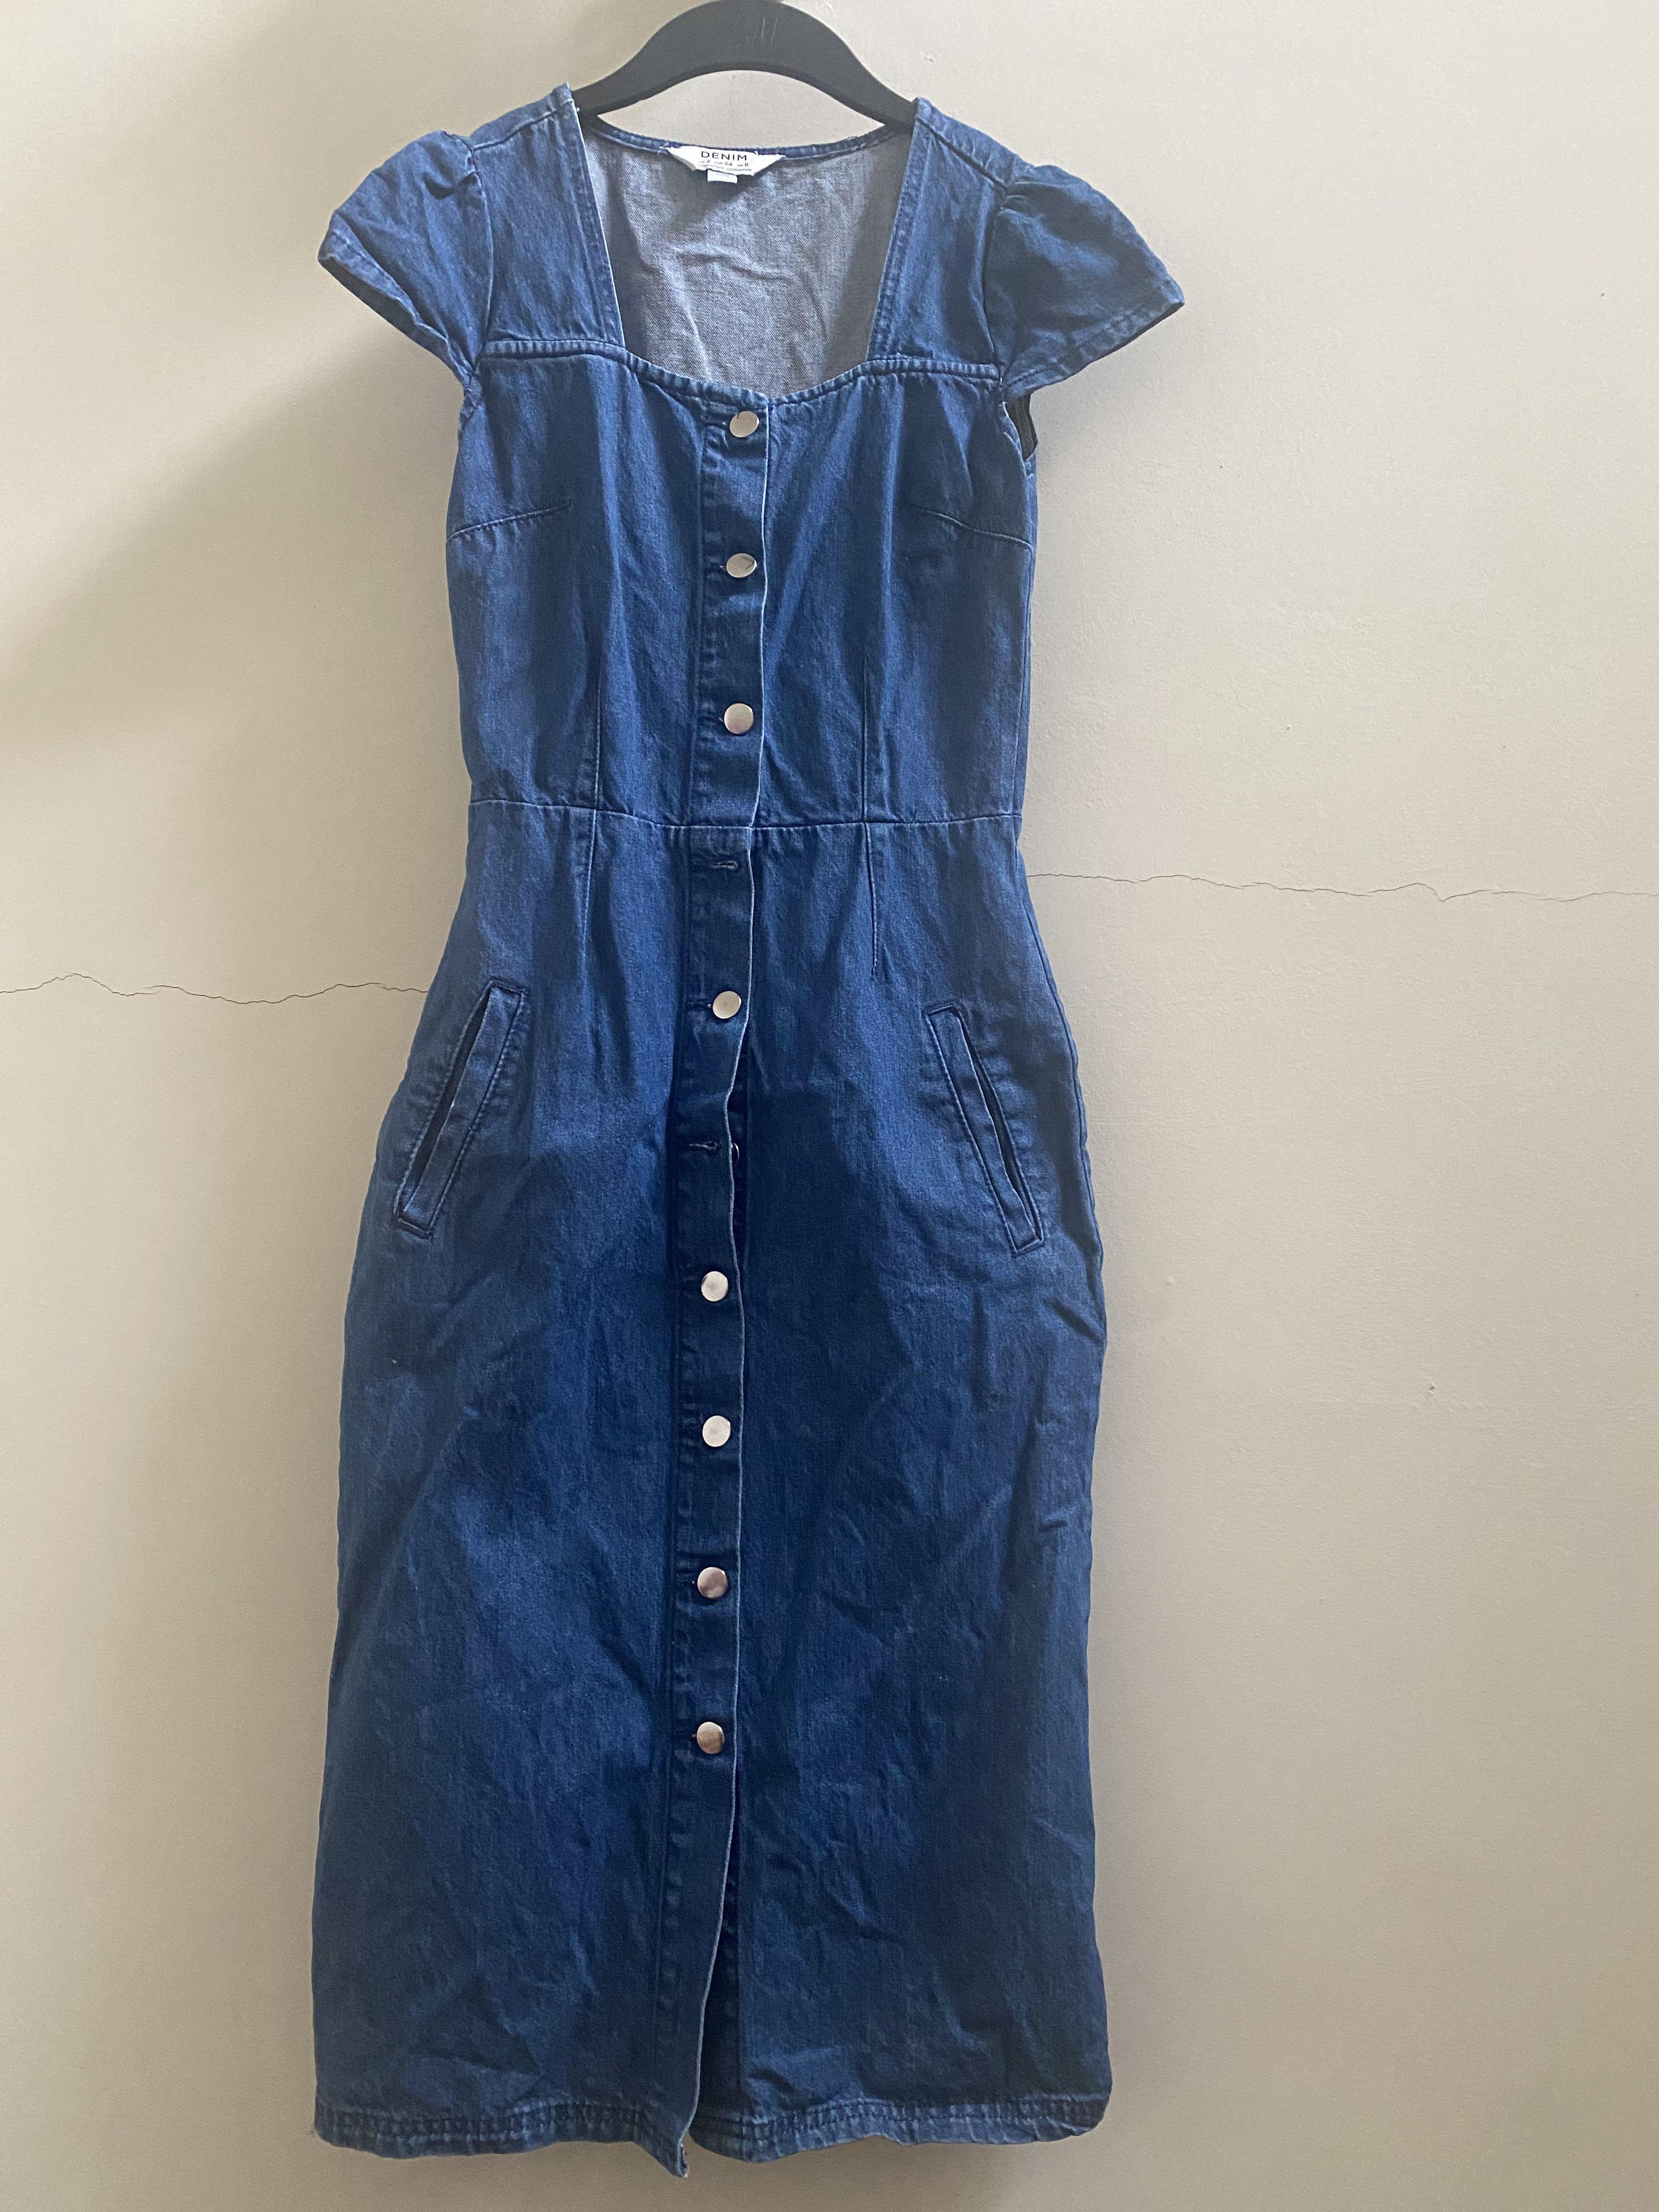 DOROTHY PERKINS DARK BLUE FITTED V Neck DENIM Dress 10 | eBay